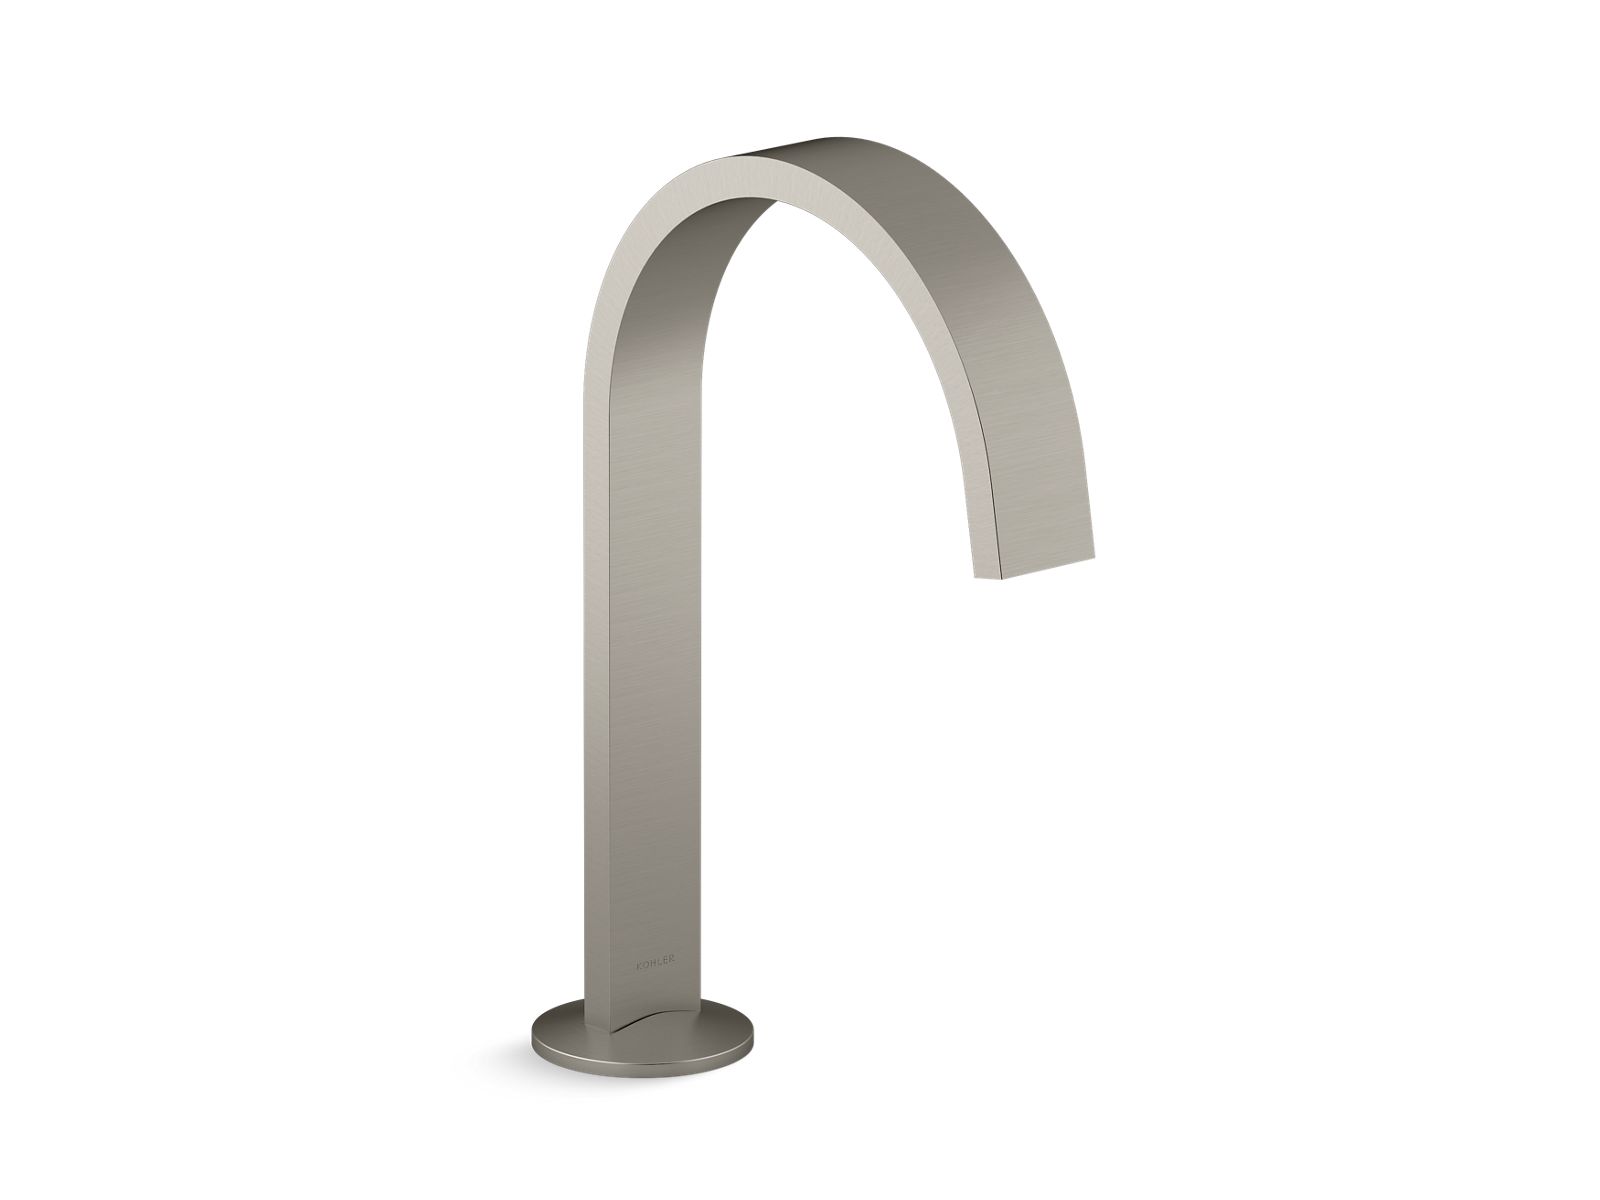 KOHLER Components Bathroom sink faucet spout with Ribbon design